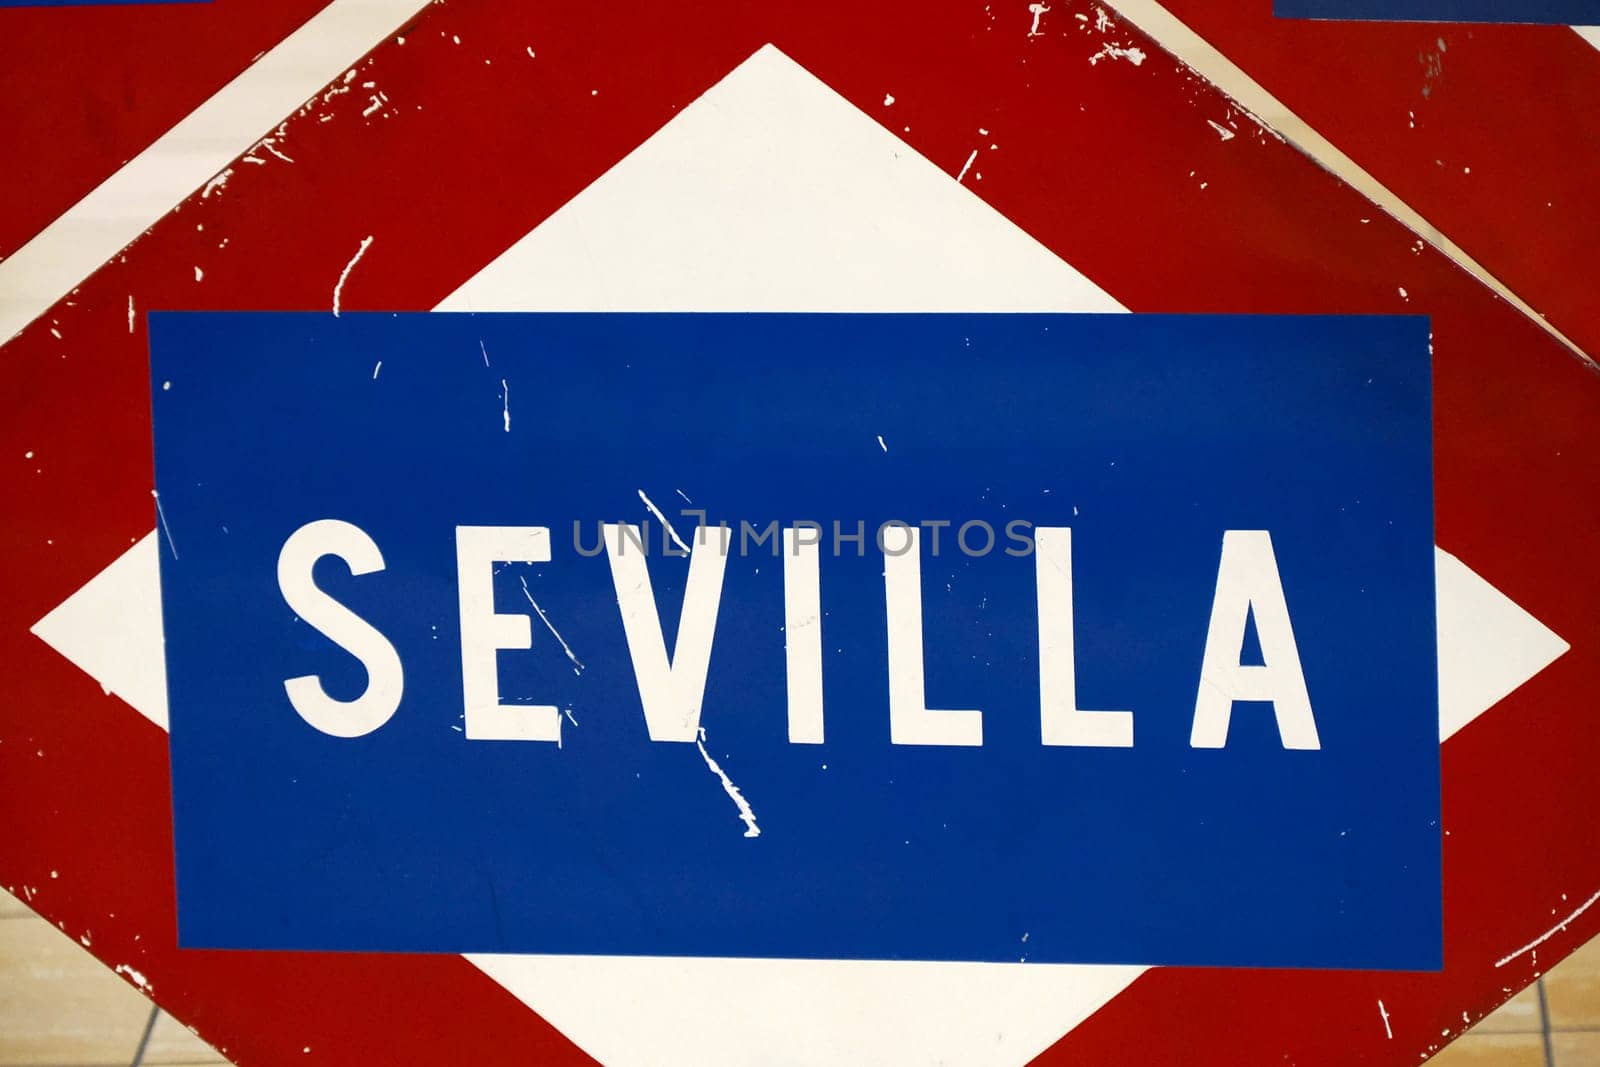 Sevilla Metro Station Sign in Madrid Spain detail